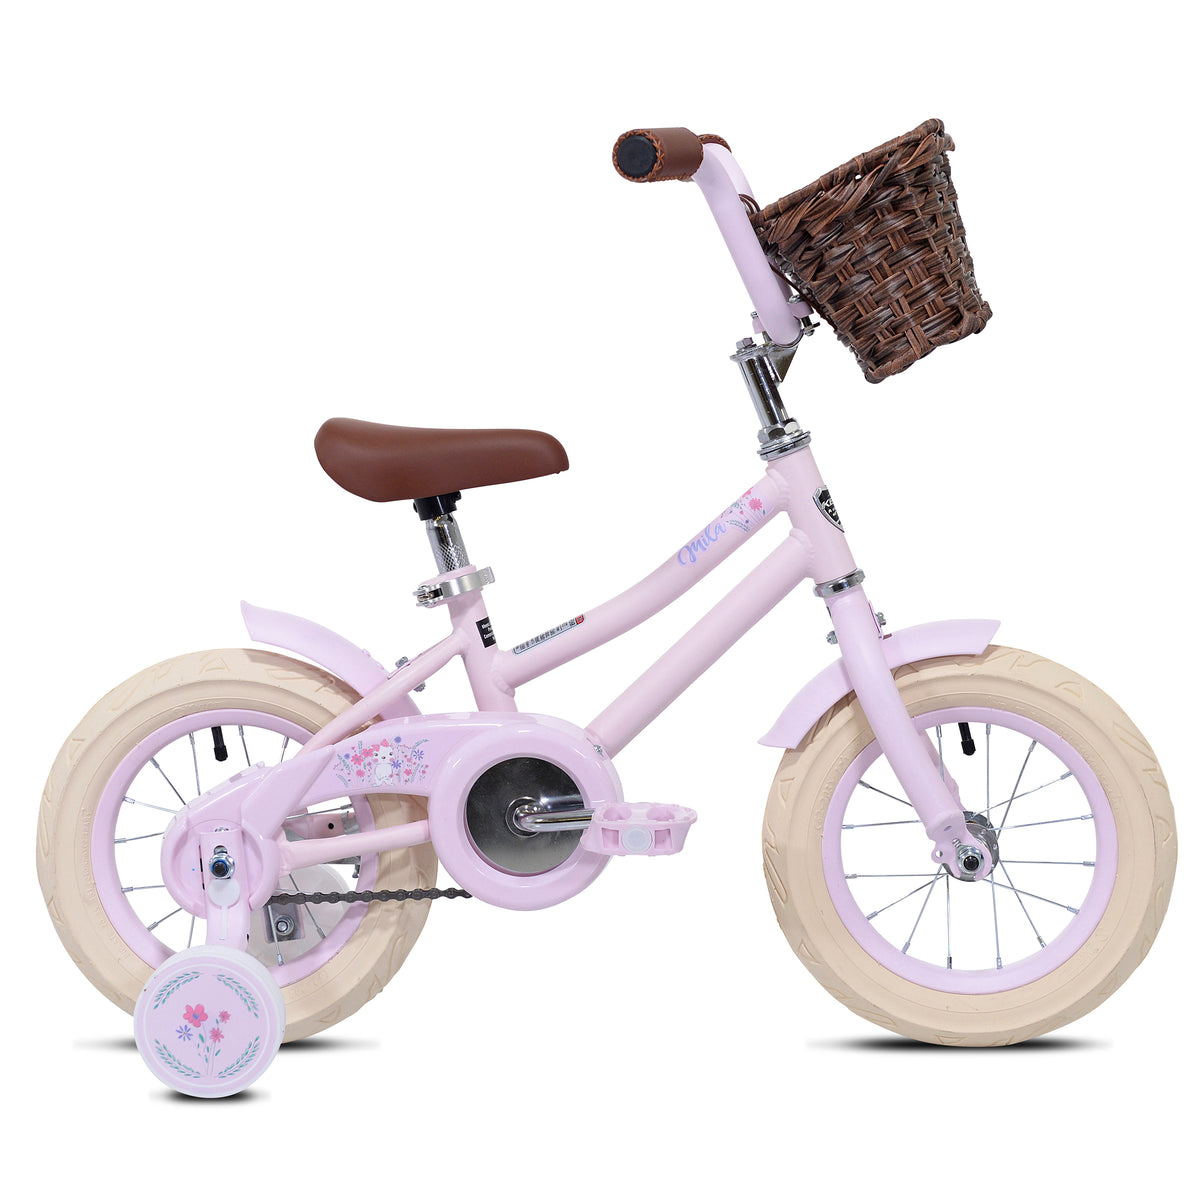 12" Kent Mila | Bike for Kids Ages 2-4